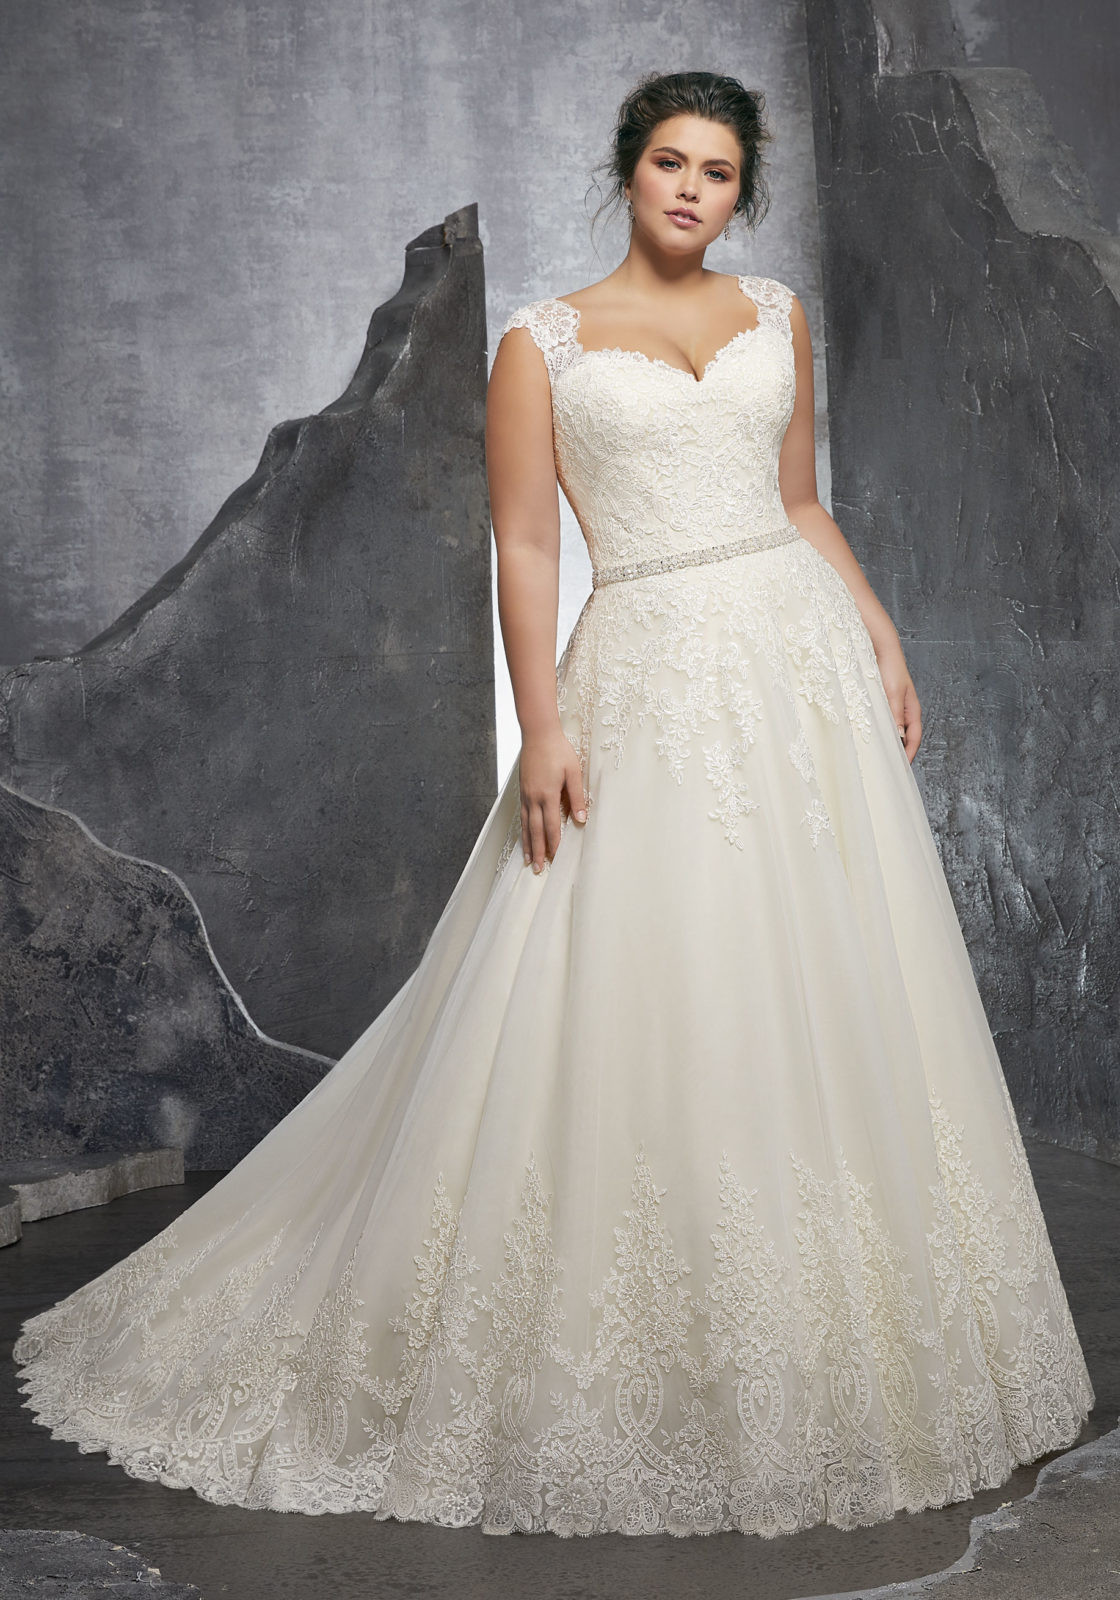 Plus Size Dresses For Wedding
 Kenley Plus Size Wedding Dress Style 3232